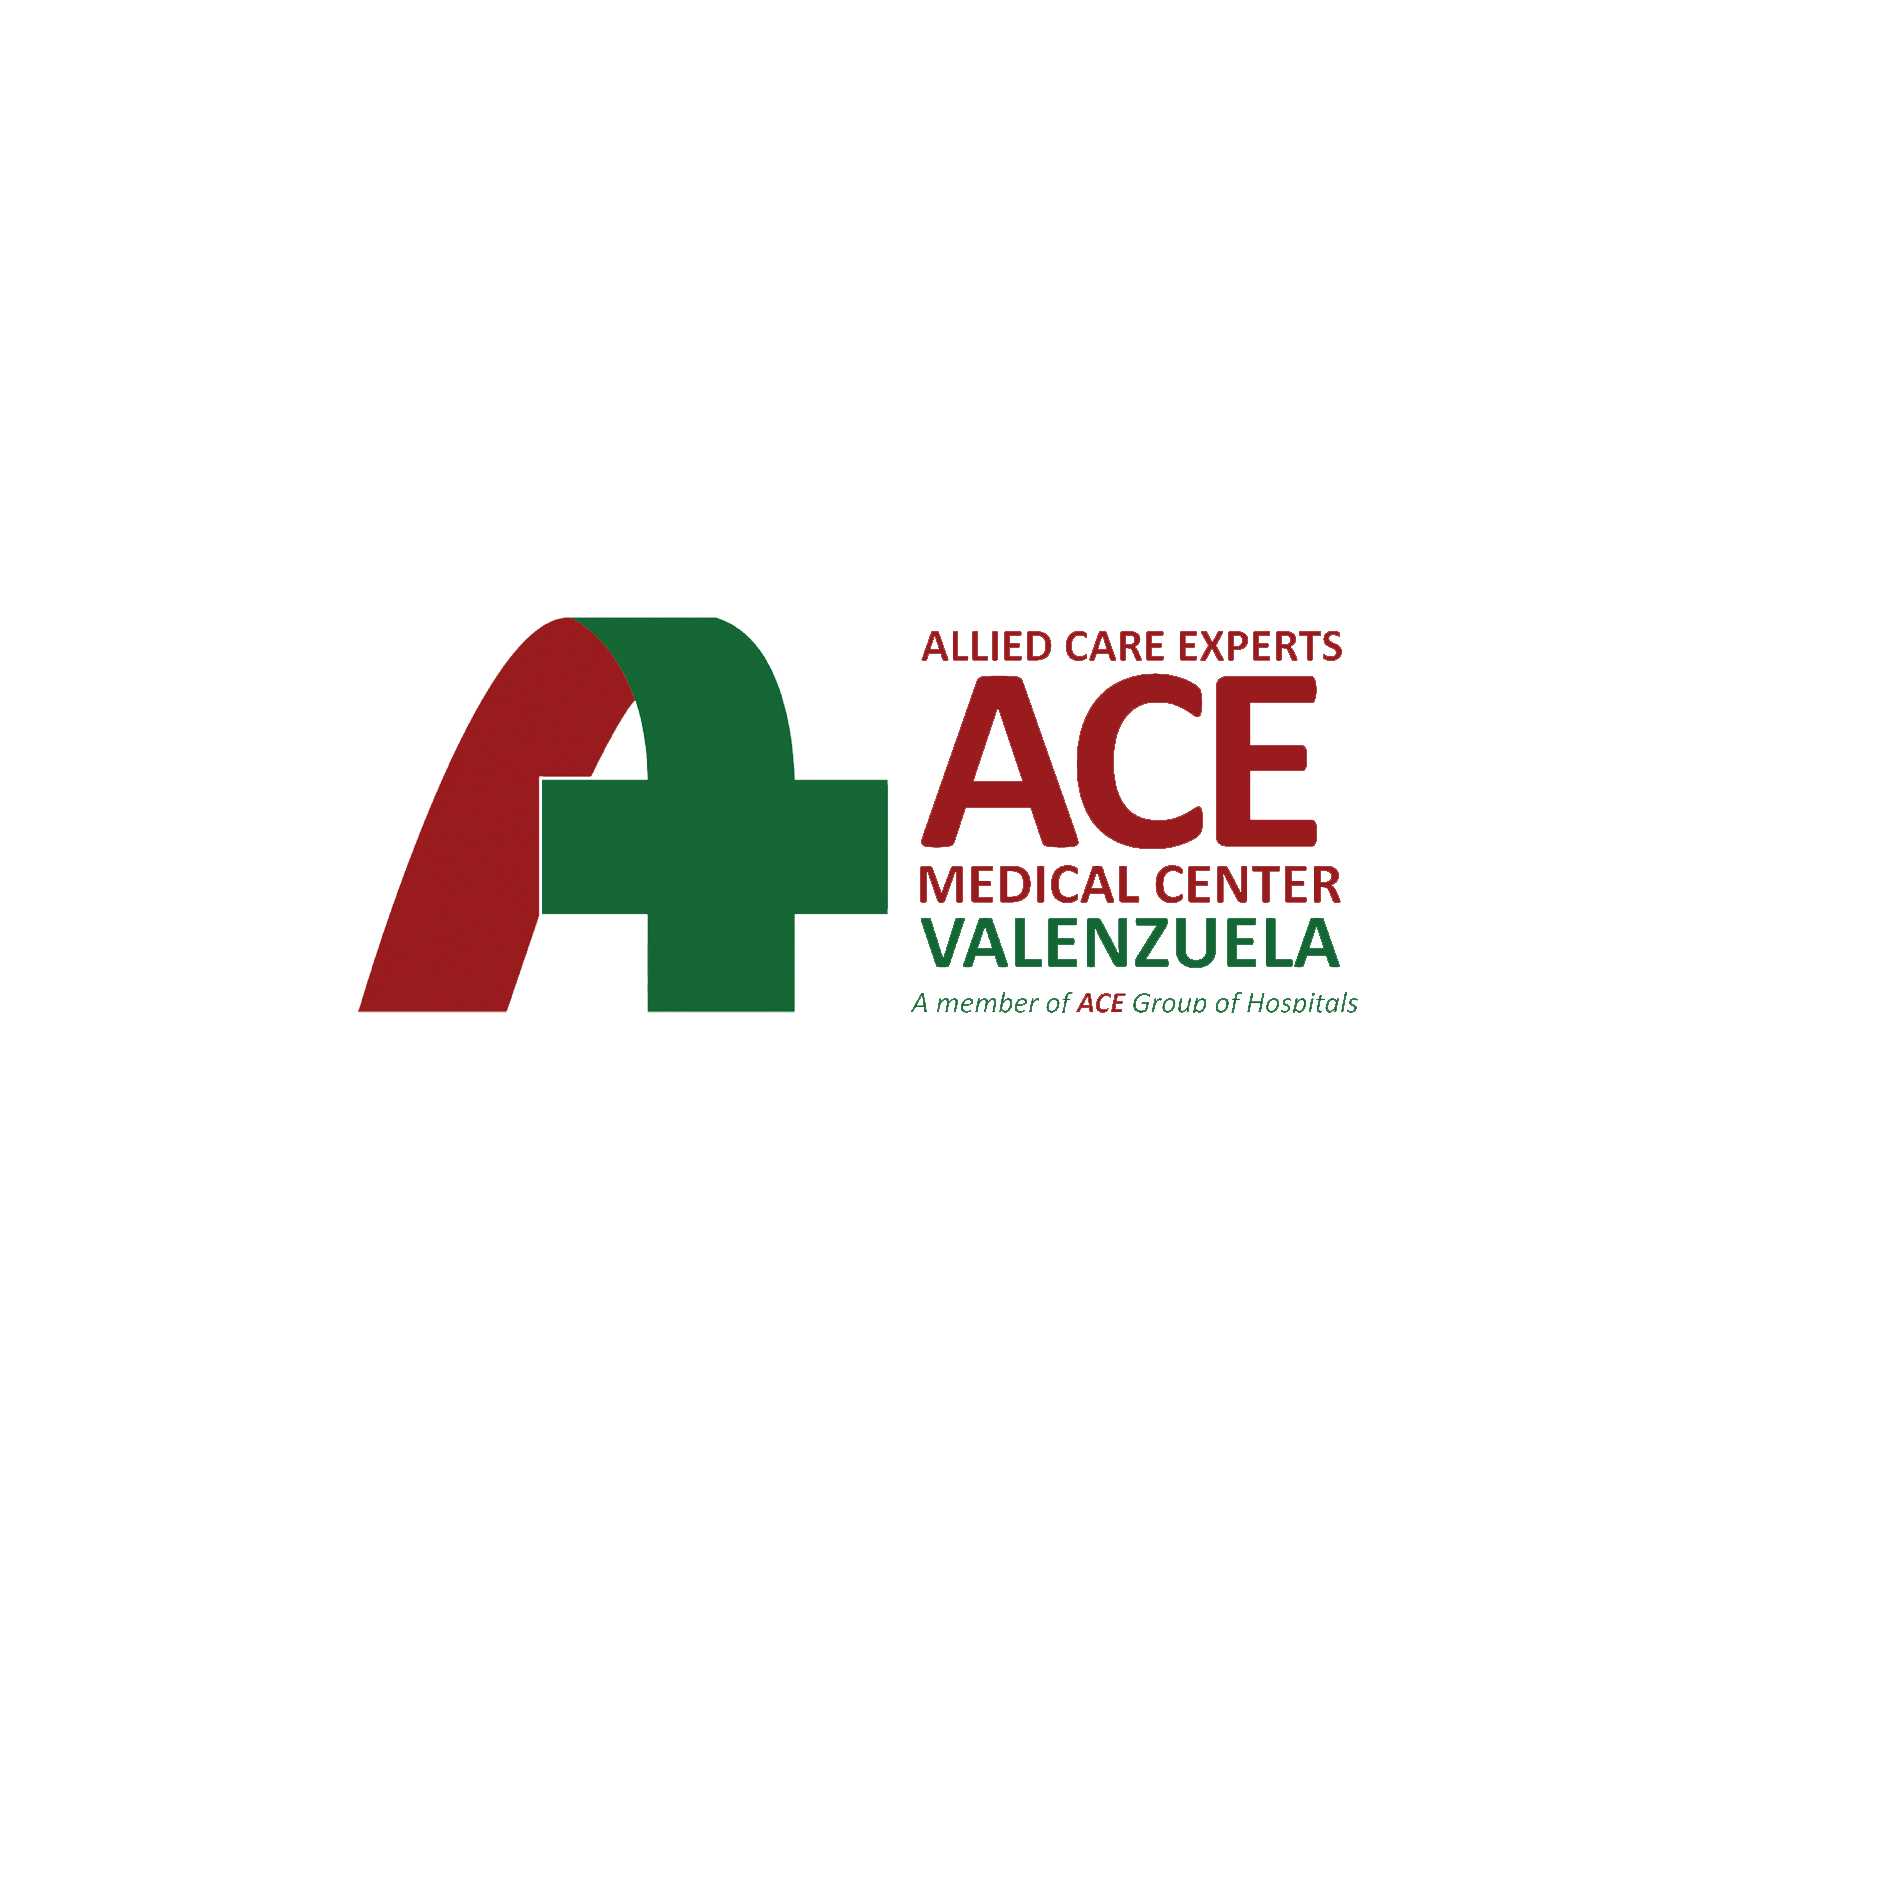 Working at Allied Care Experts (ACE) Medical Center Valenzuela| Bossjob